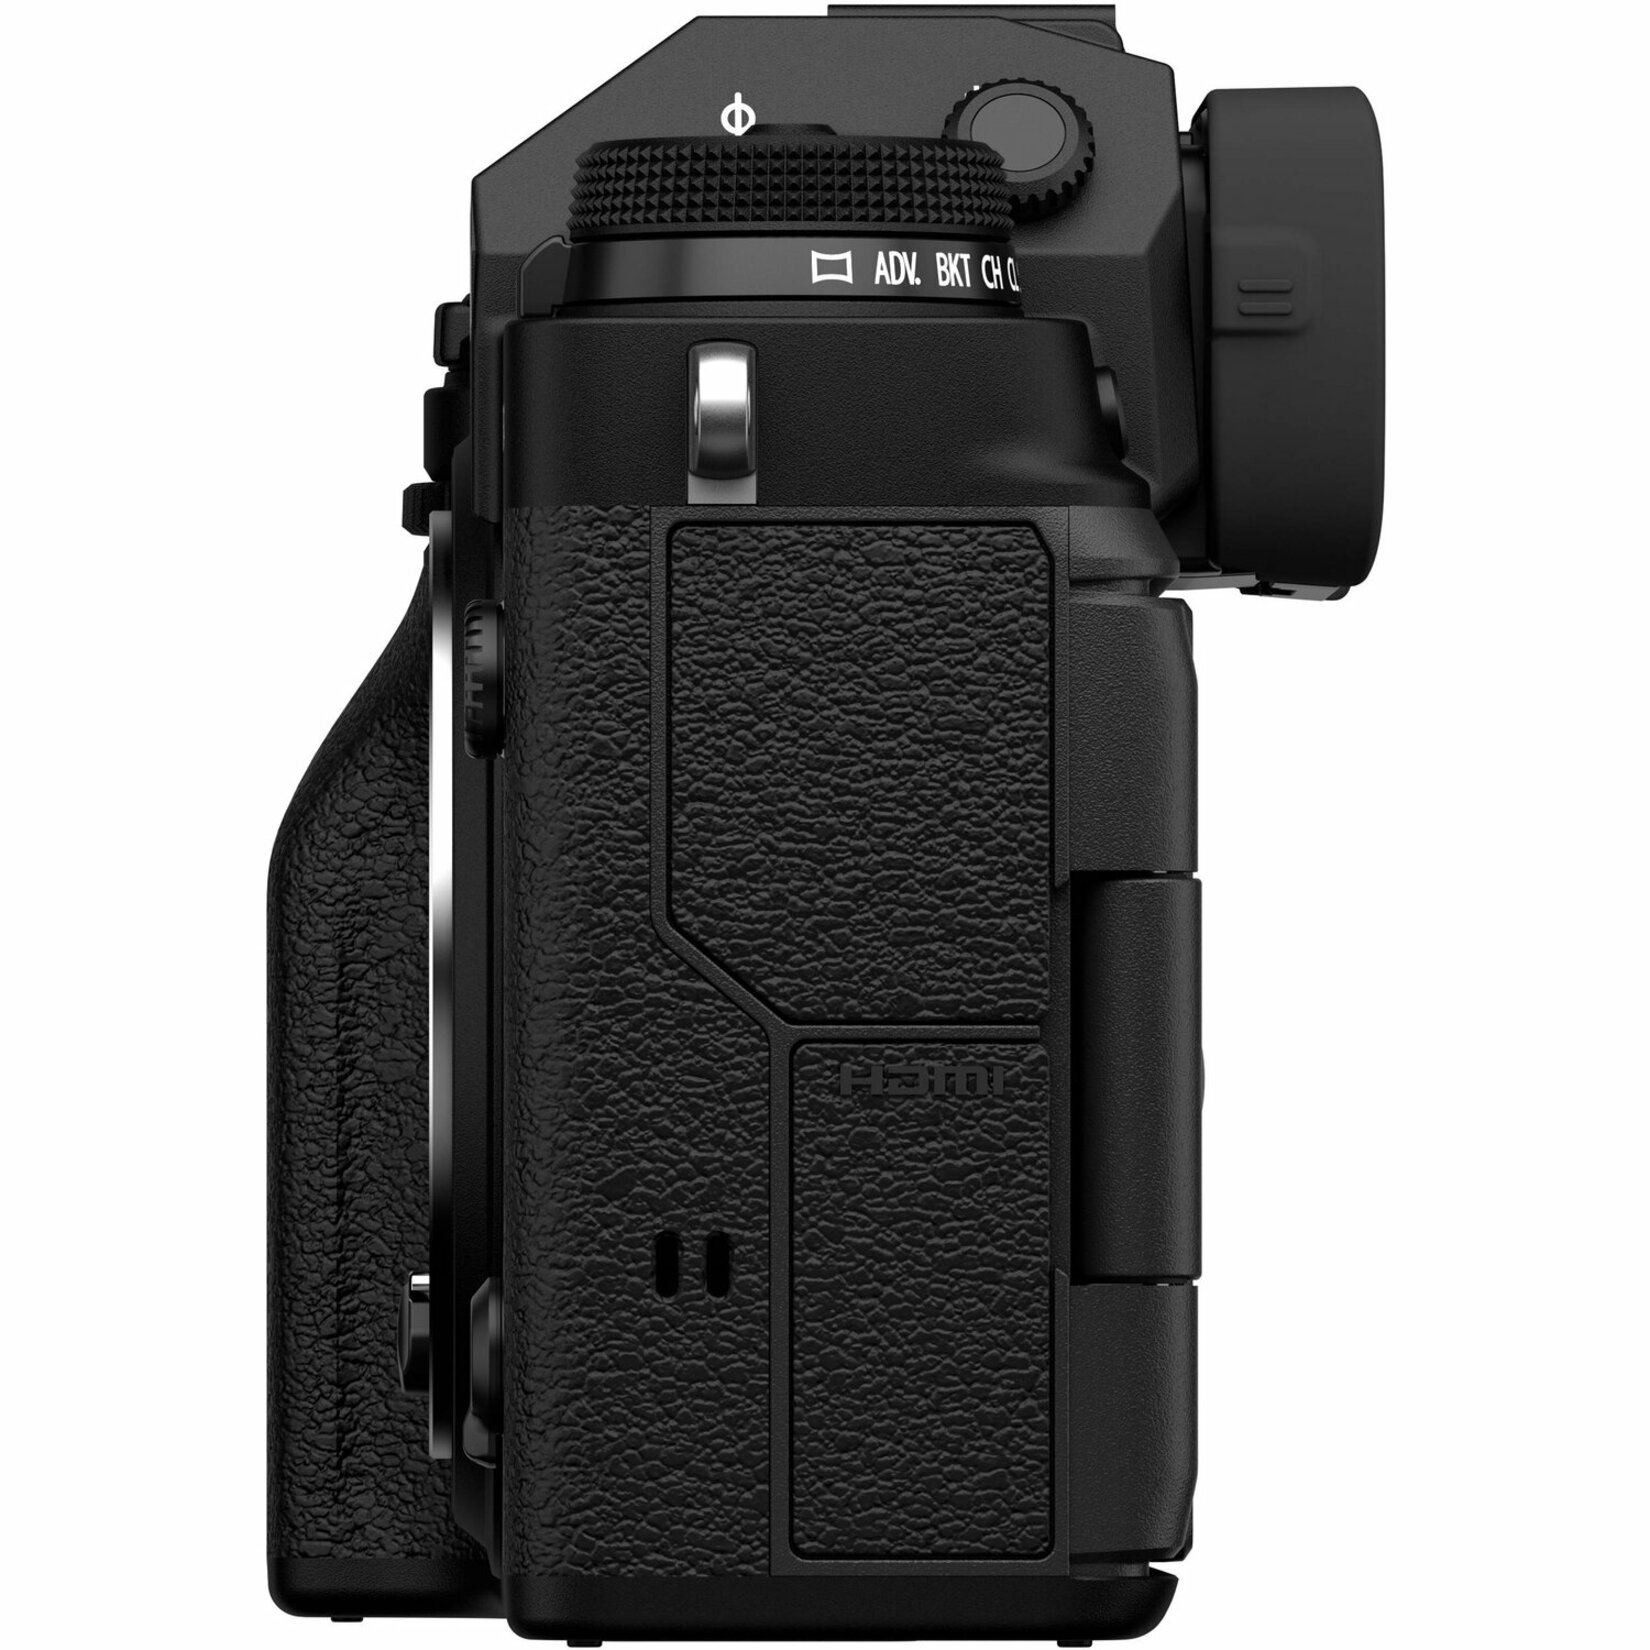 Fujifilm X-T4 26.1 Megapixel Mirrorless Camera Body Only, Black - image 2 of 10